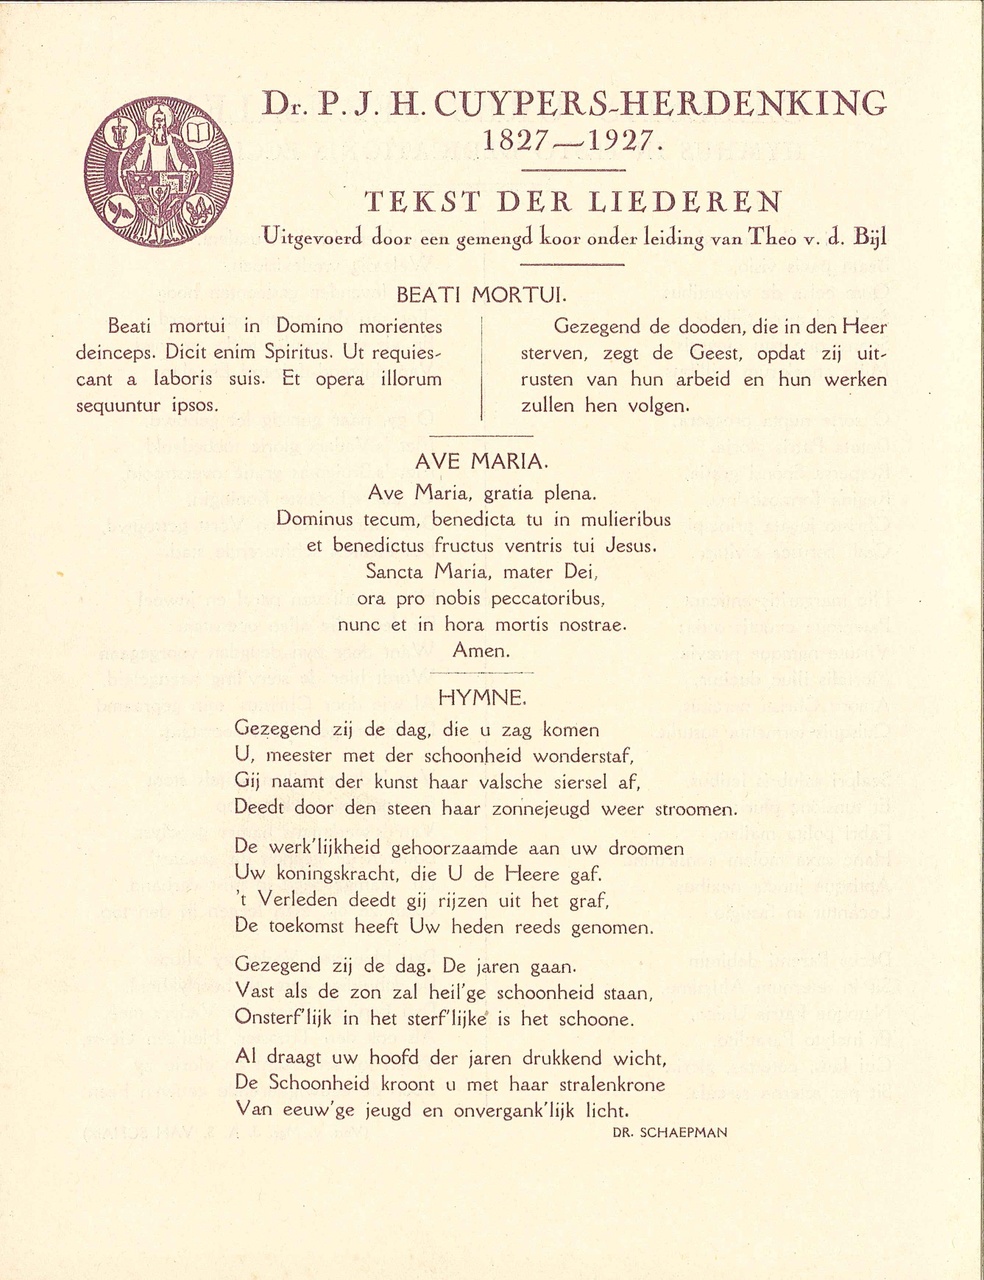 Tekst der liederen, Dr. P.J.H. Cuypers-Herdenking 1827-1927